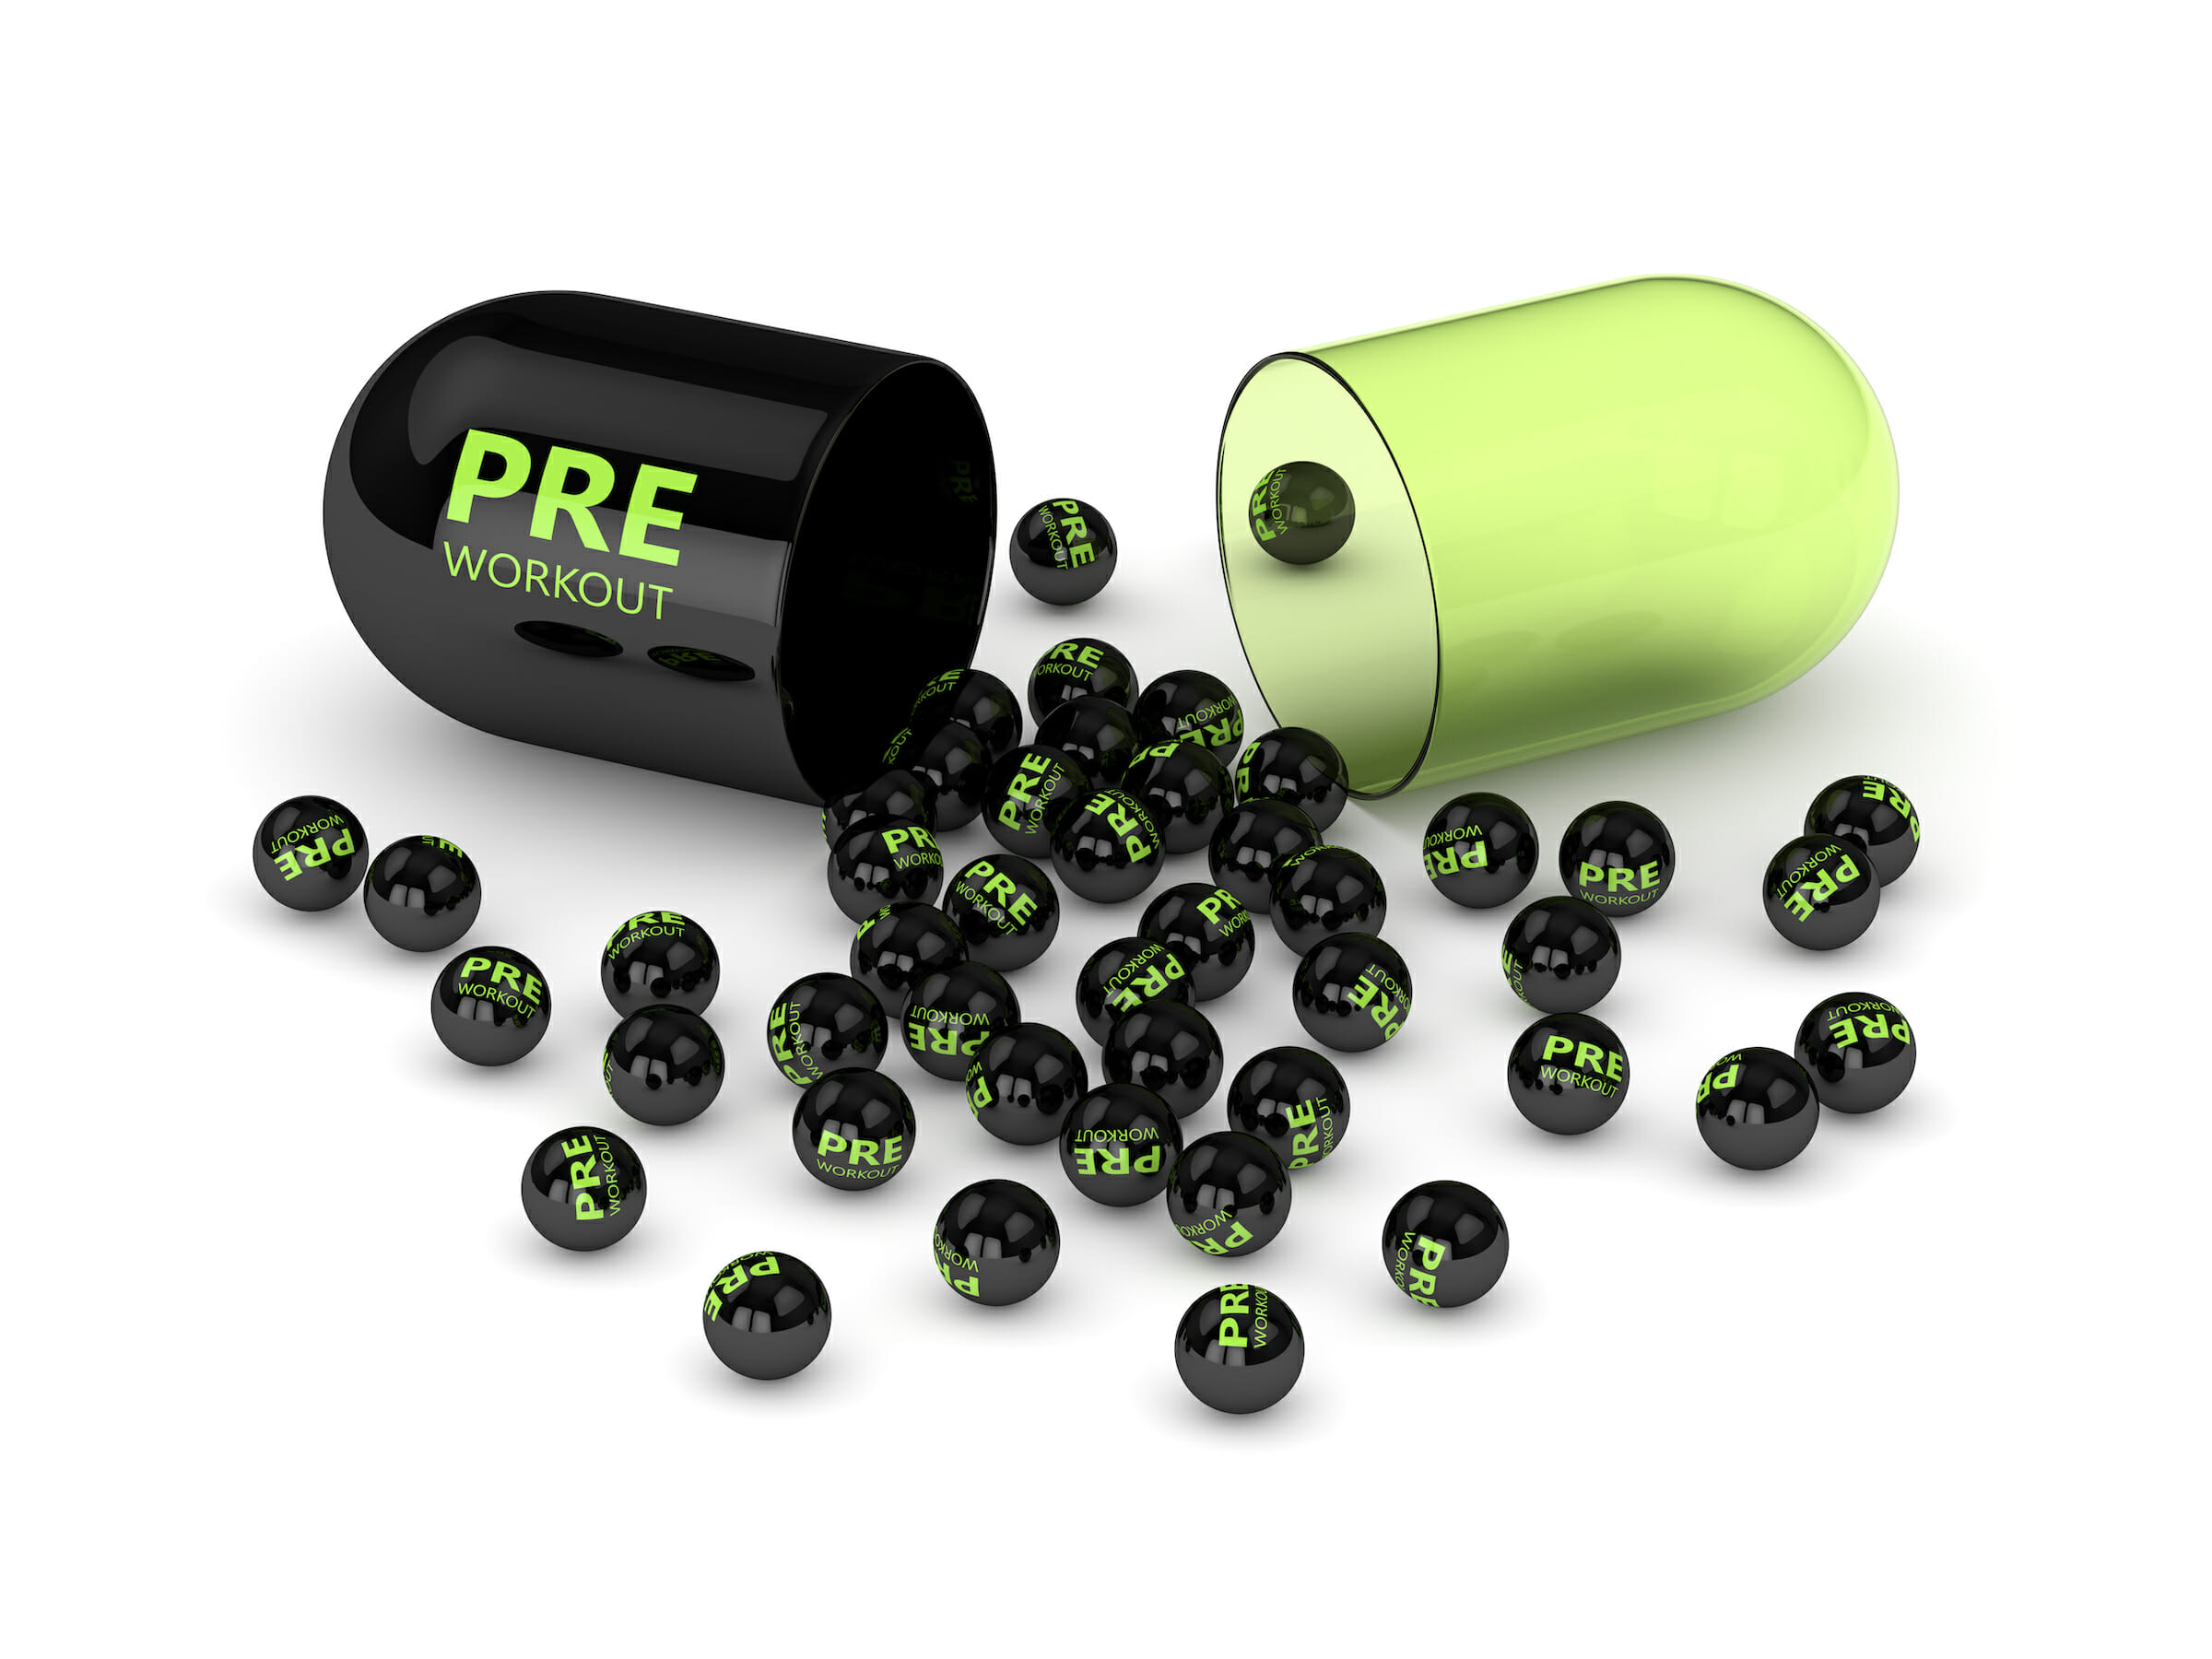 Pure Wod Clean Pre Workout Supplement for Crossfit, Paleo, Caffeine from Green Tea, Includes BCAA, Creatine, Arginine, Carnitine, Citrulline